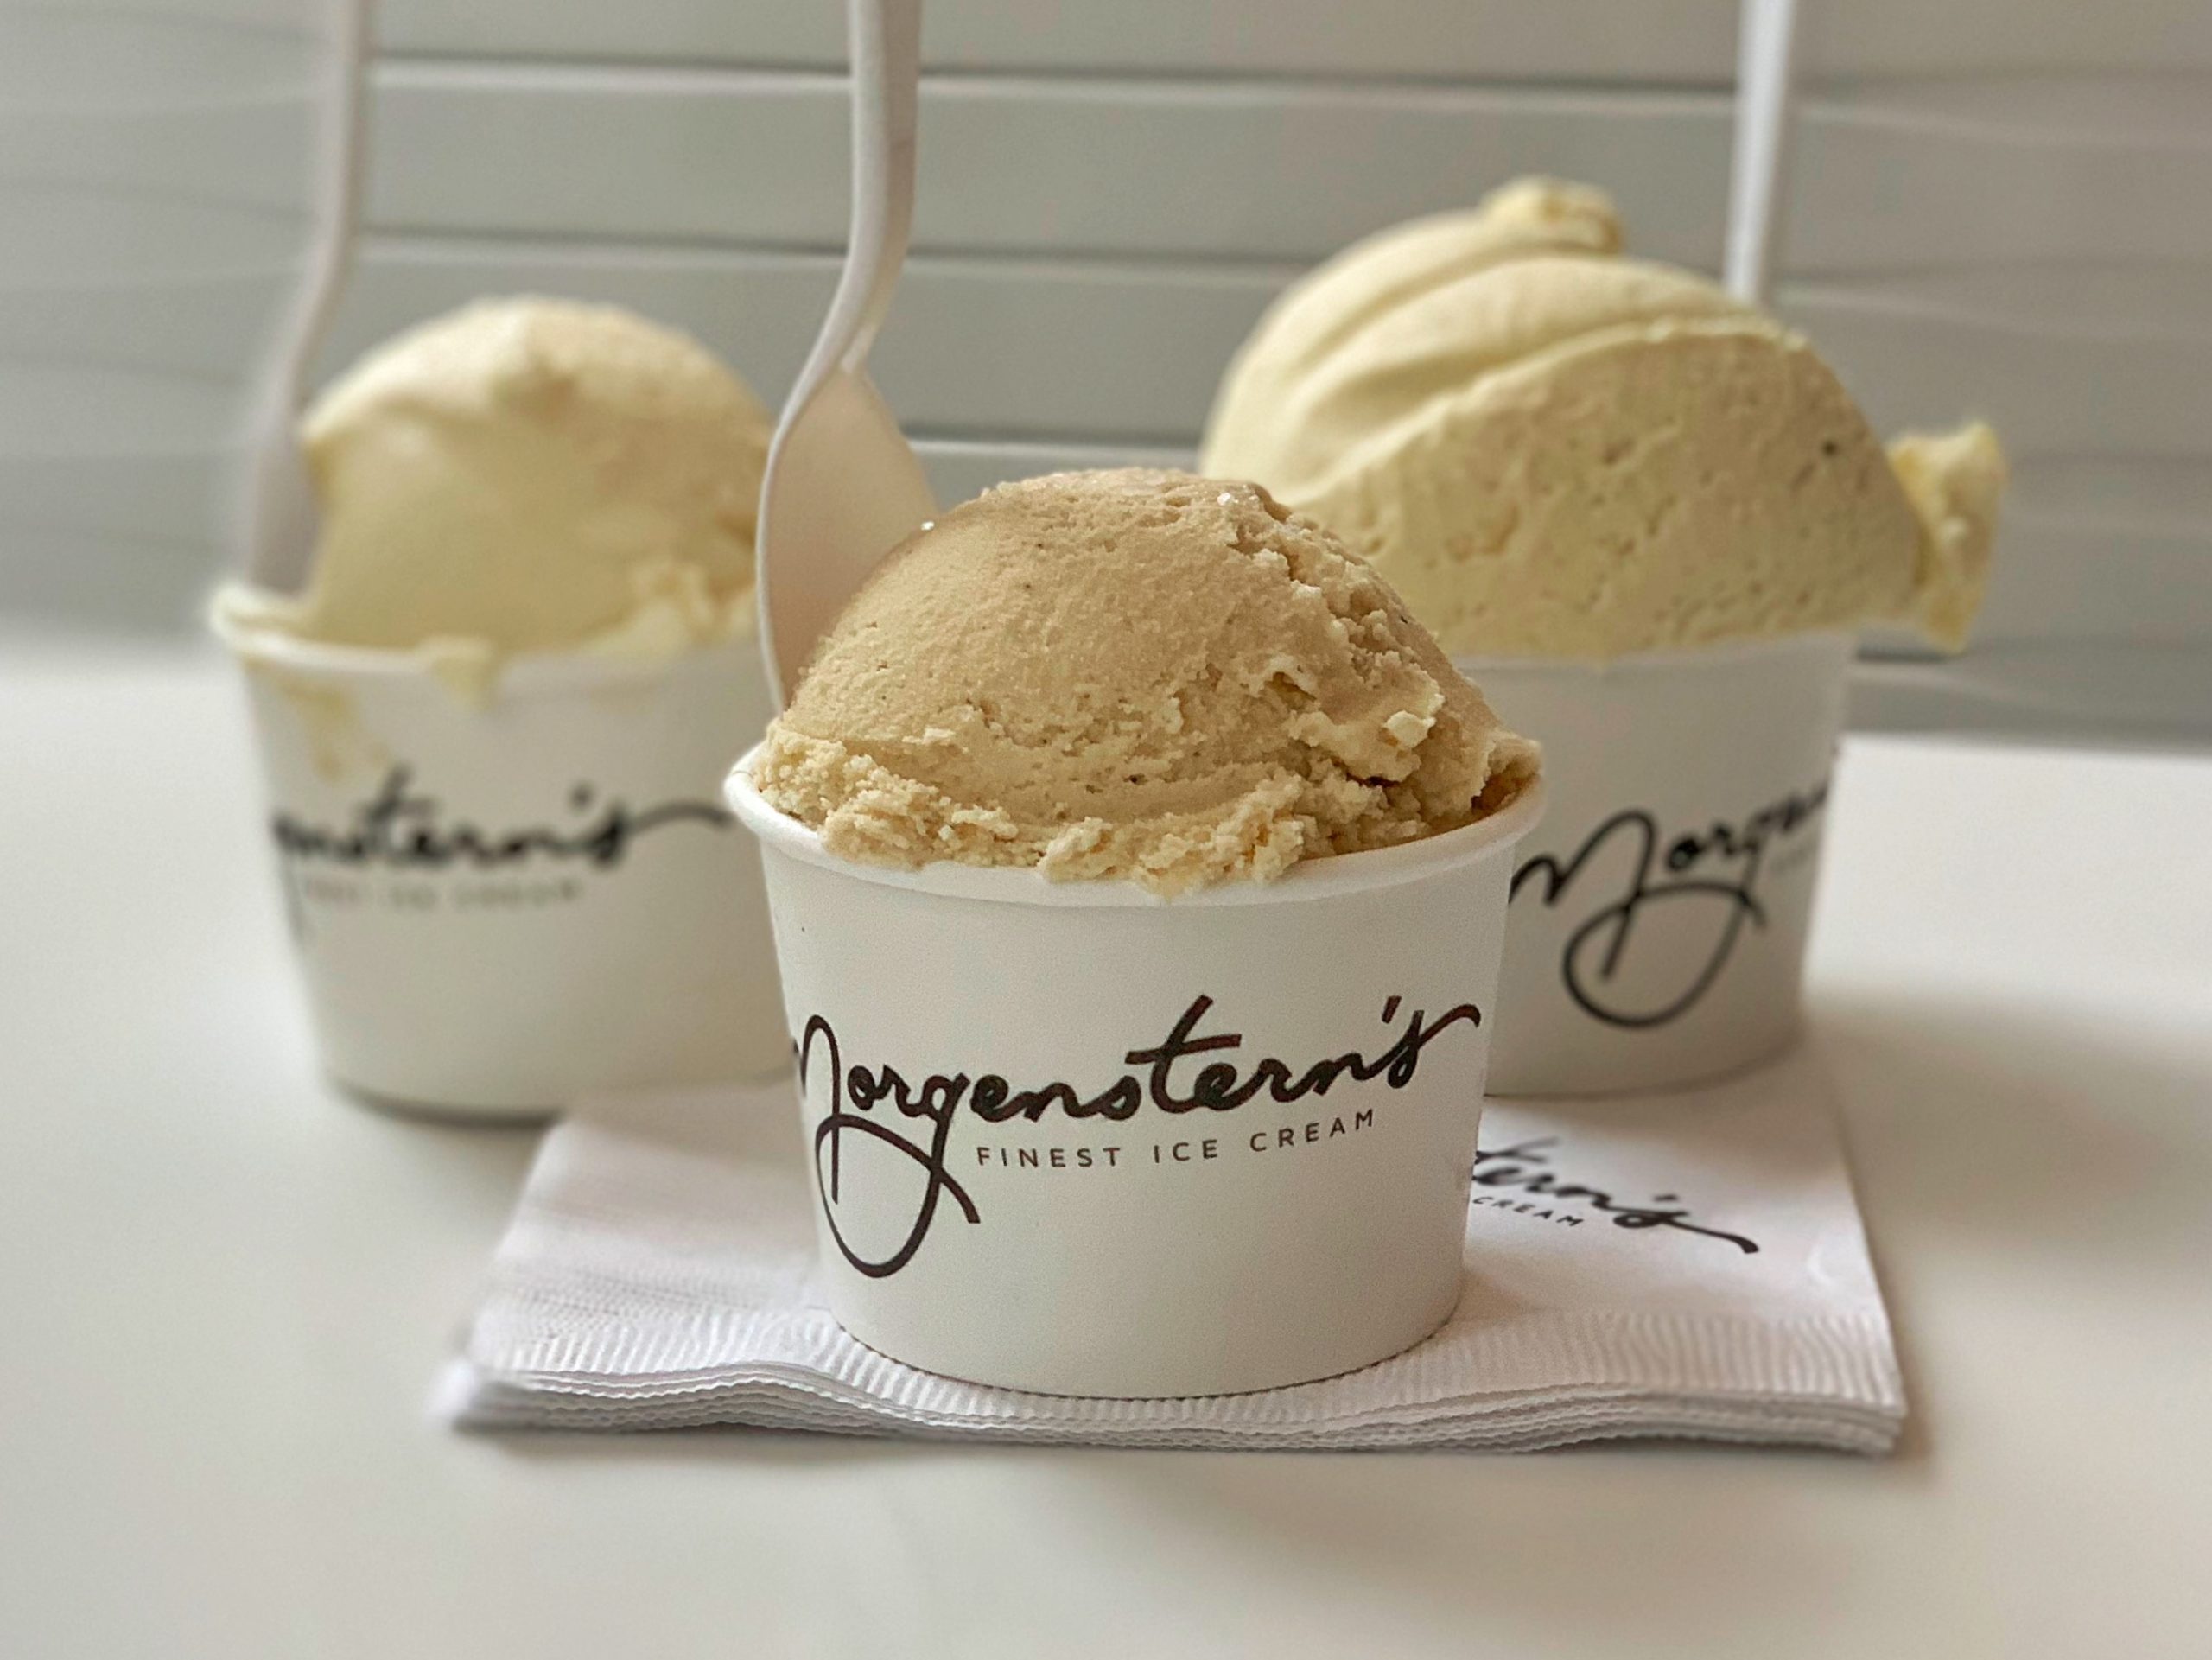 Morgenstern's Finest Ice Cream – Seeking a Pastry Cook (West Village)